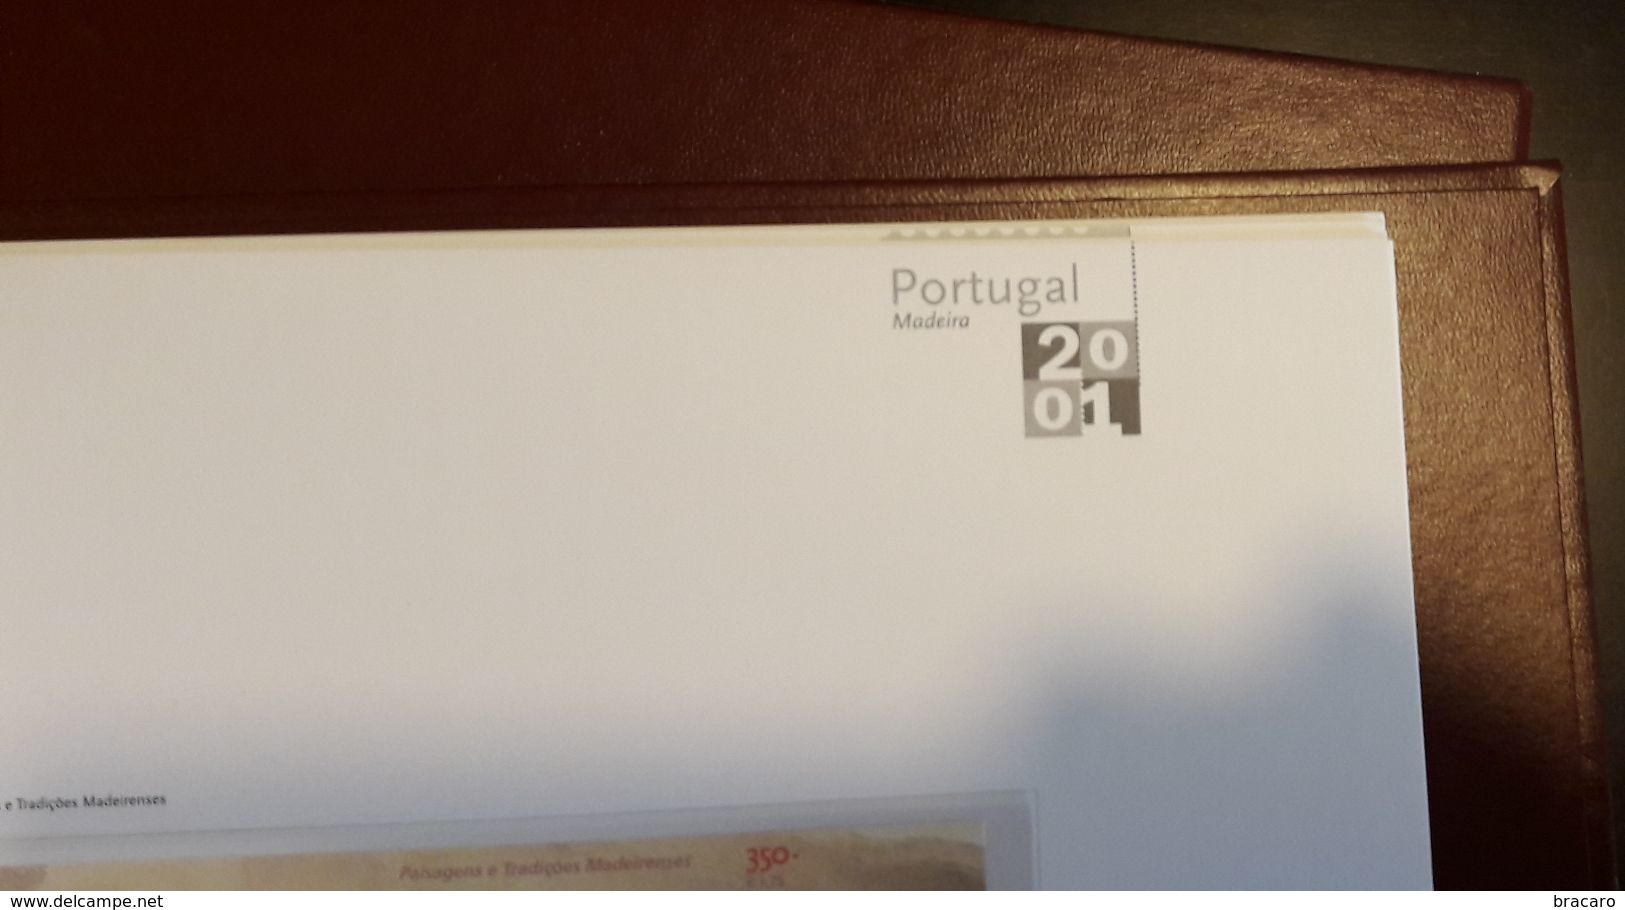 PORTUGAL - ÁLBUM FILATÉLICO - full year stamps + blocks + ATM / machine stamps + miniature sheets - MNH - 2007